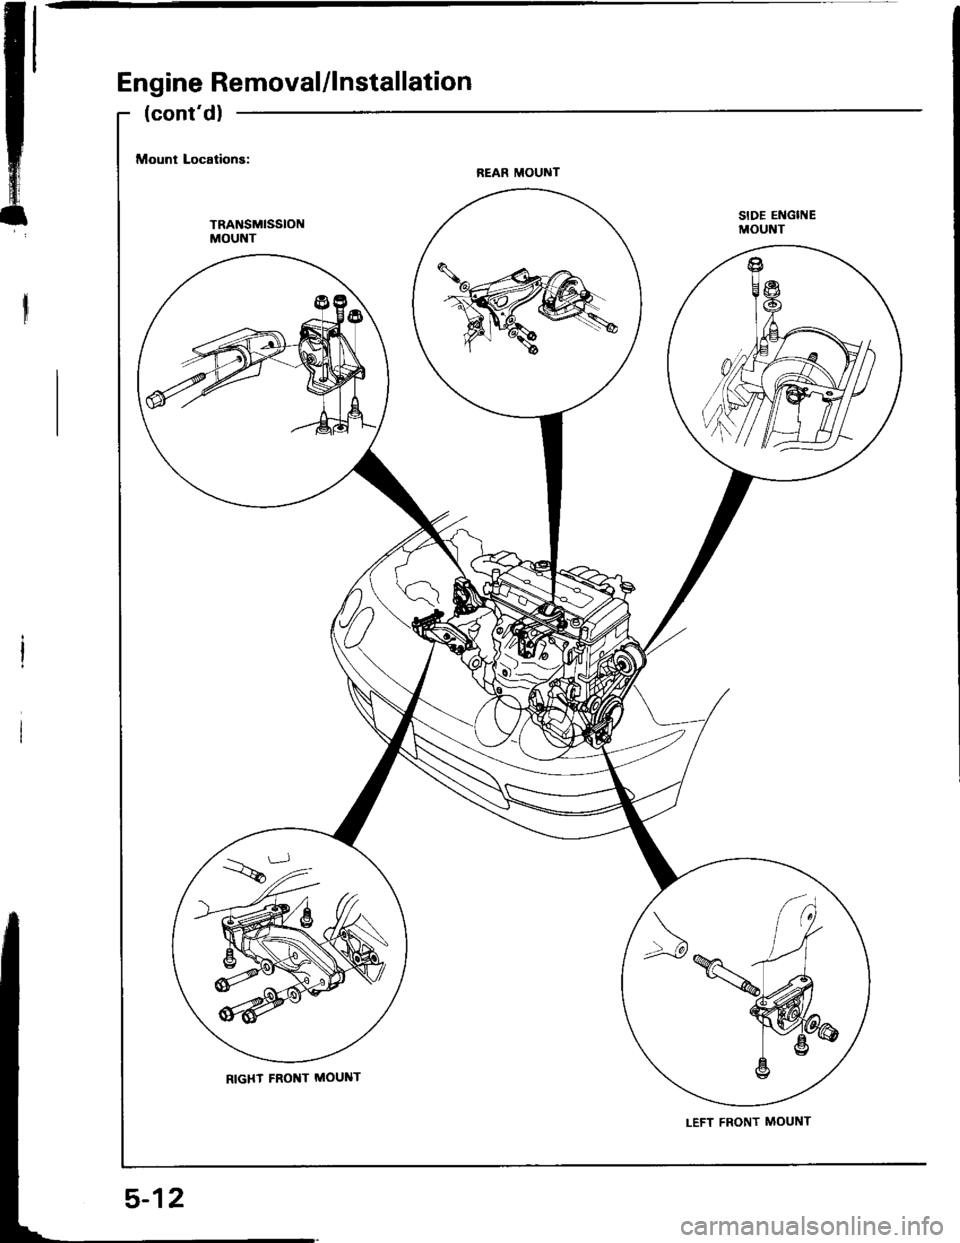 HONDA INTEGRA 1994 4.G Workshop Manual Engine Removal/lnstallation
SIDE ENGITIEMOUNT
5-12 